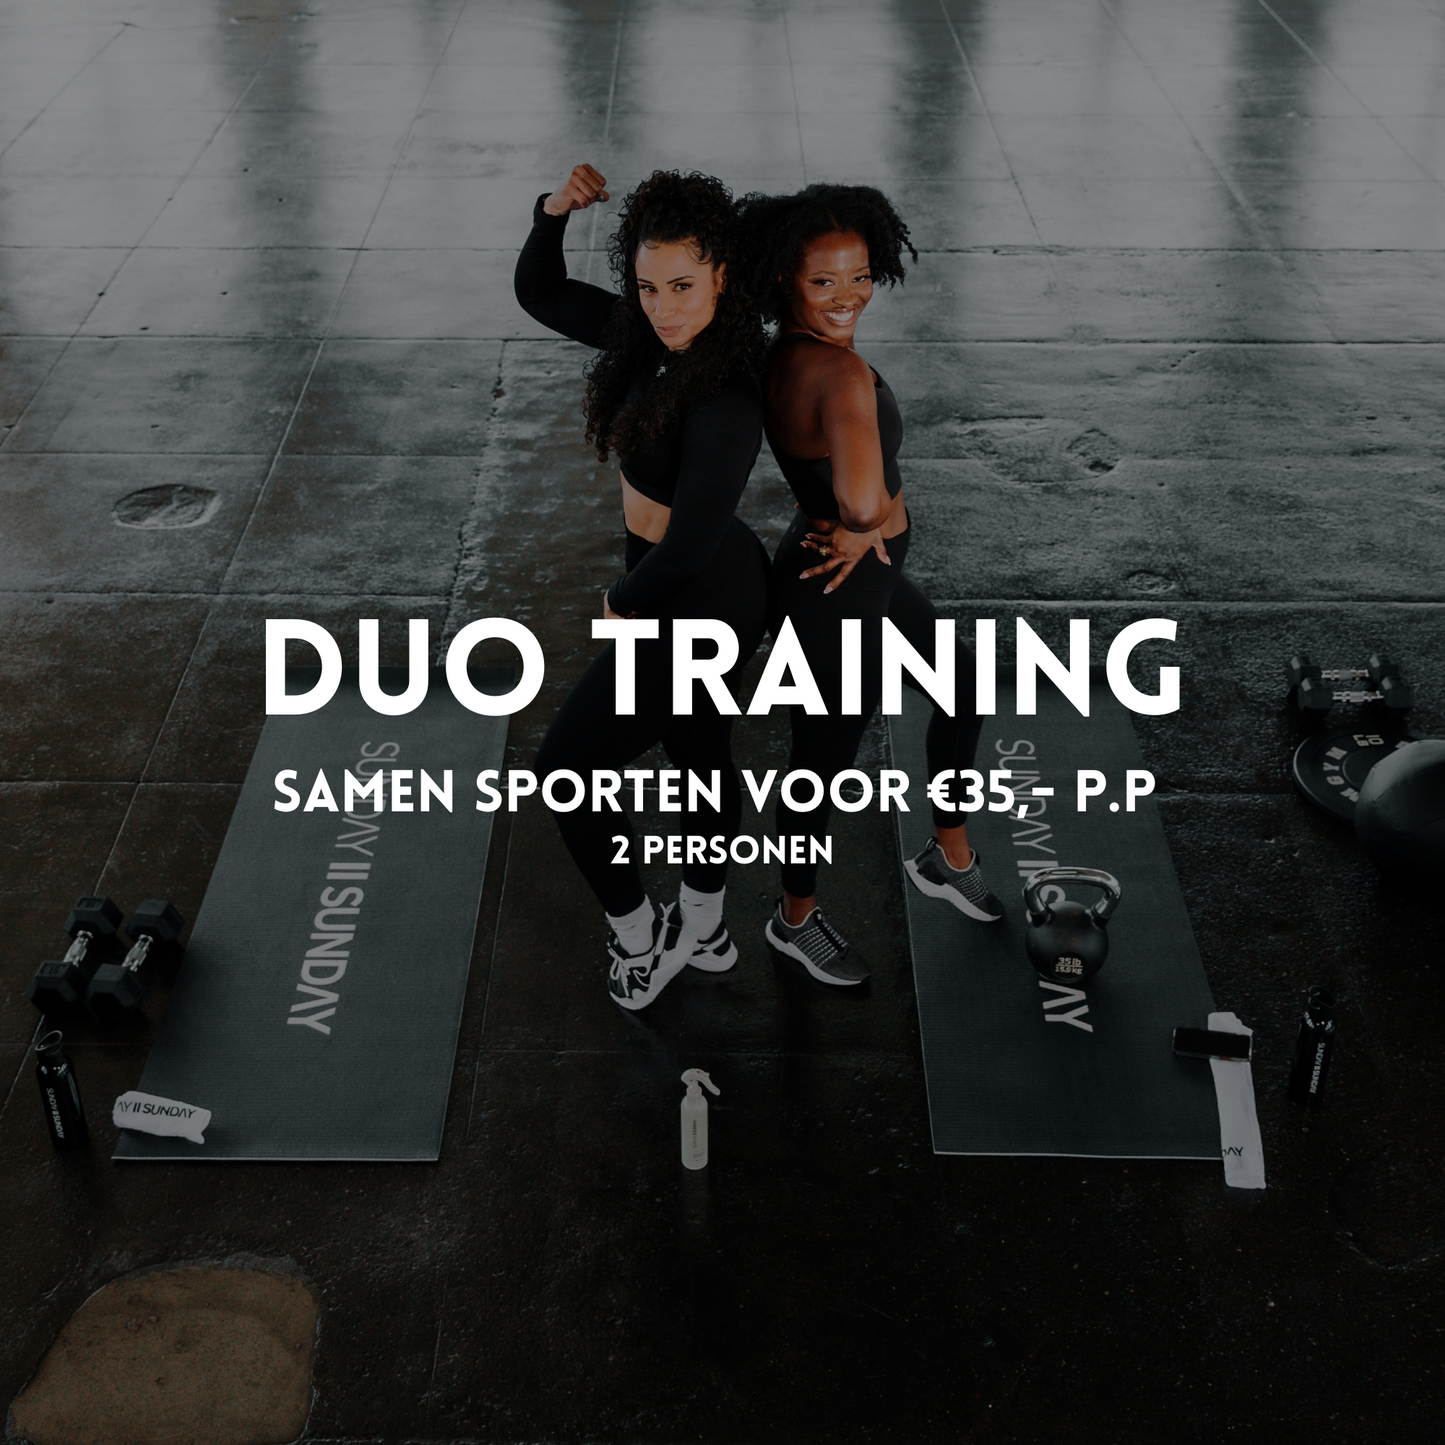 DUO Training - 2 Personen